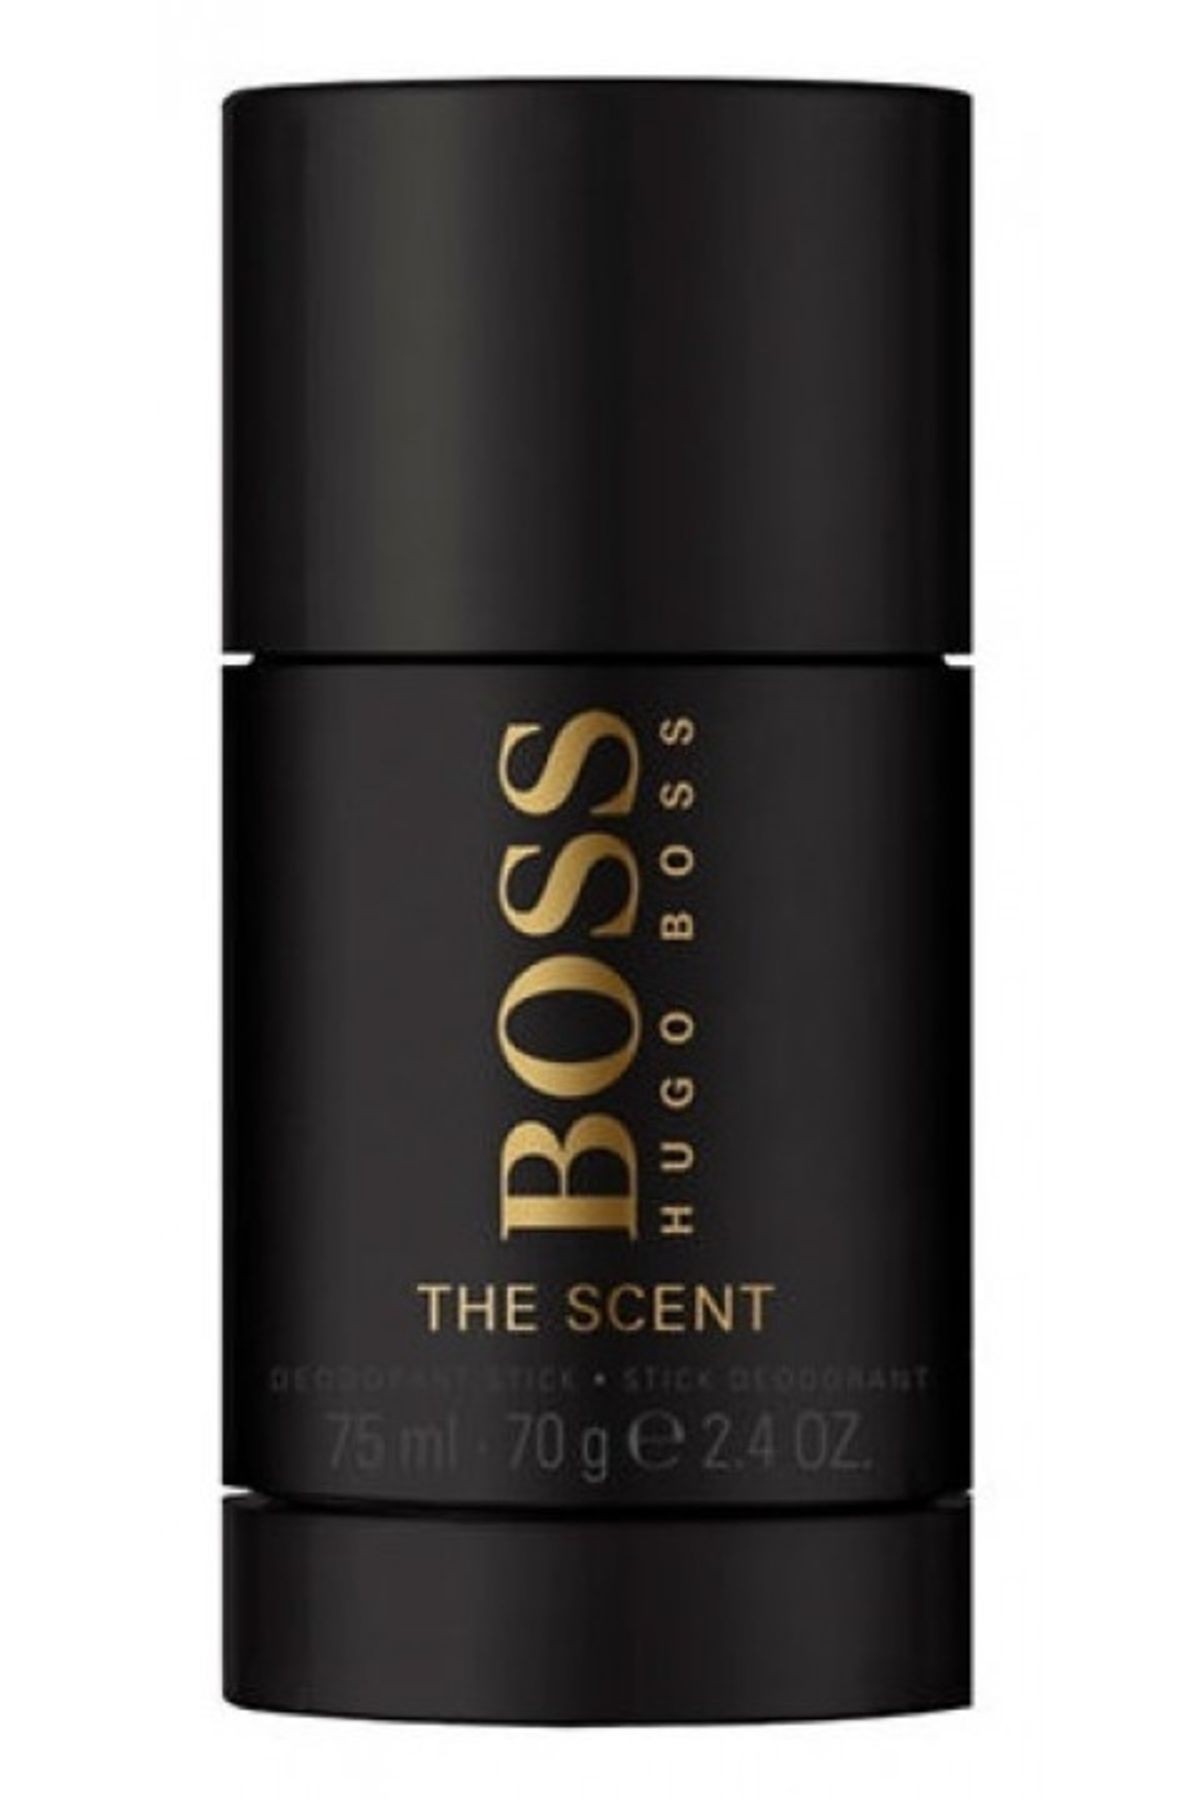 Hugo Boss The Scent 75 gr Deo Stick